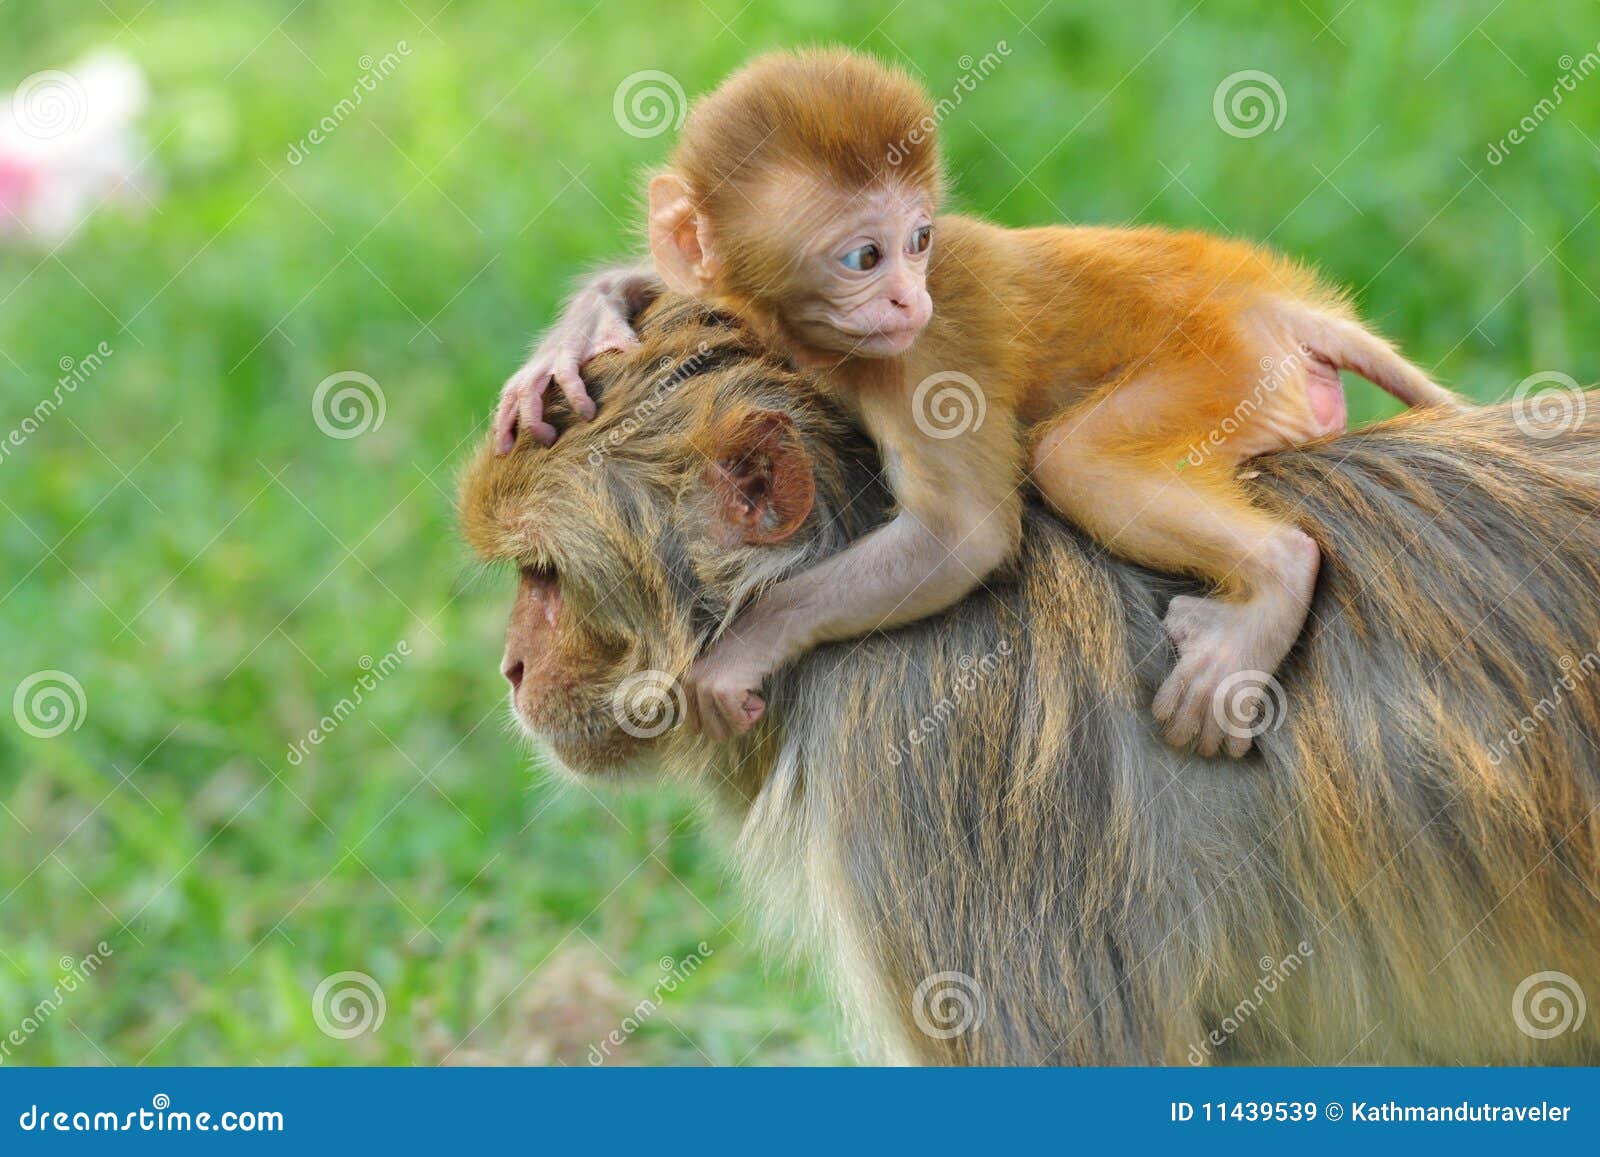 baby rhesus macaque monkey in kathmandu